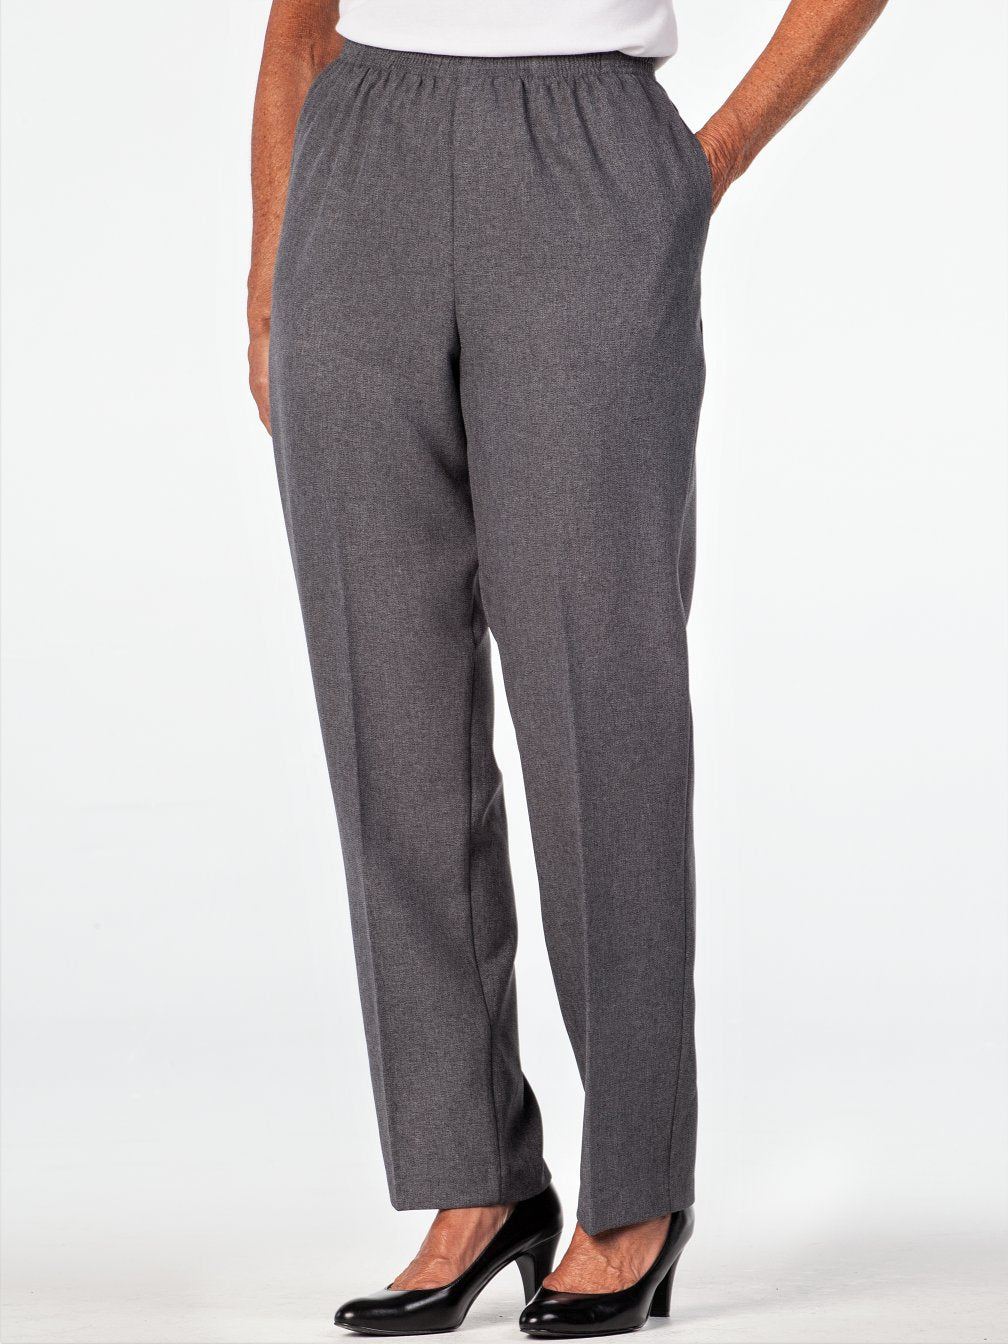 Haite Women Dress Lounge Pants Business Elastic Waist Casual Stretch Work Trousers  Slacks with 4 Pockets  Walmartcom